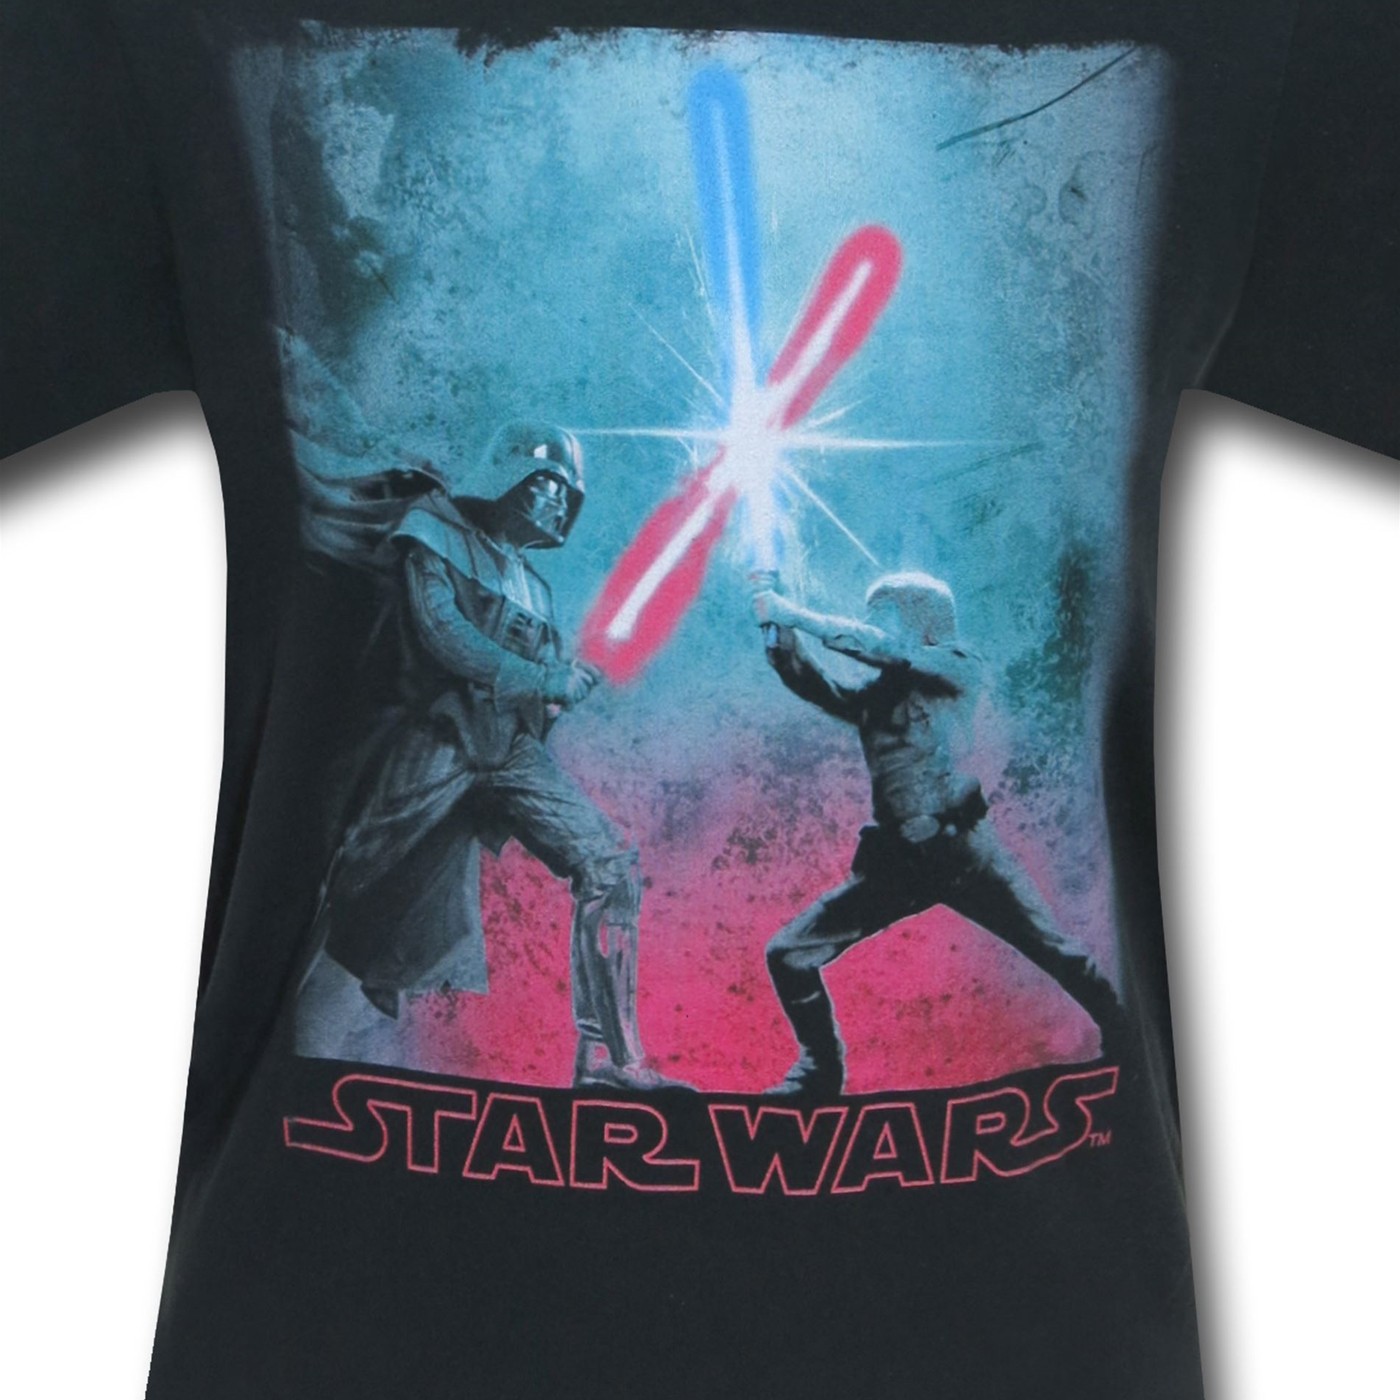 Star Wars Big Duel T-Shirt